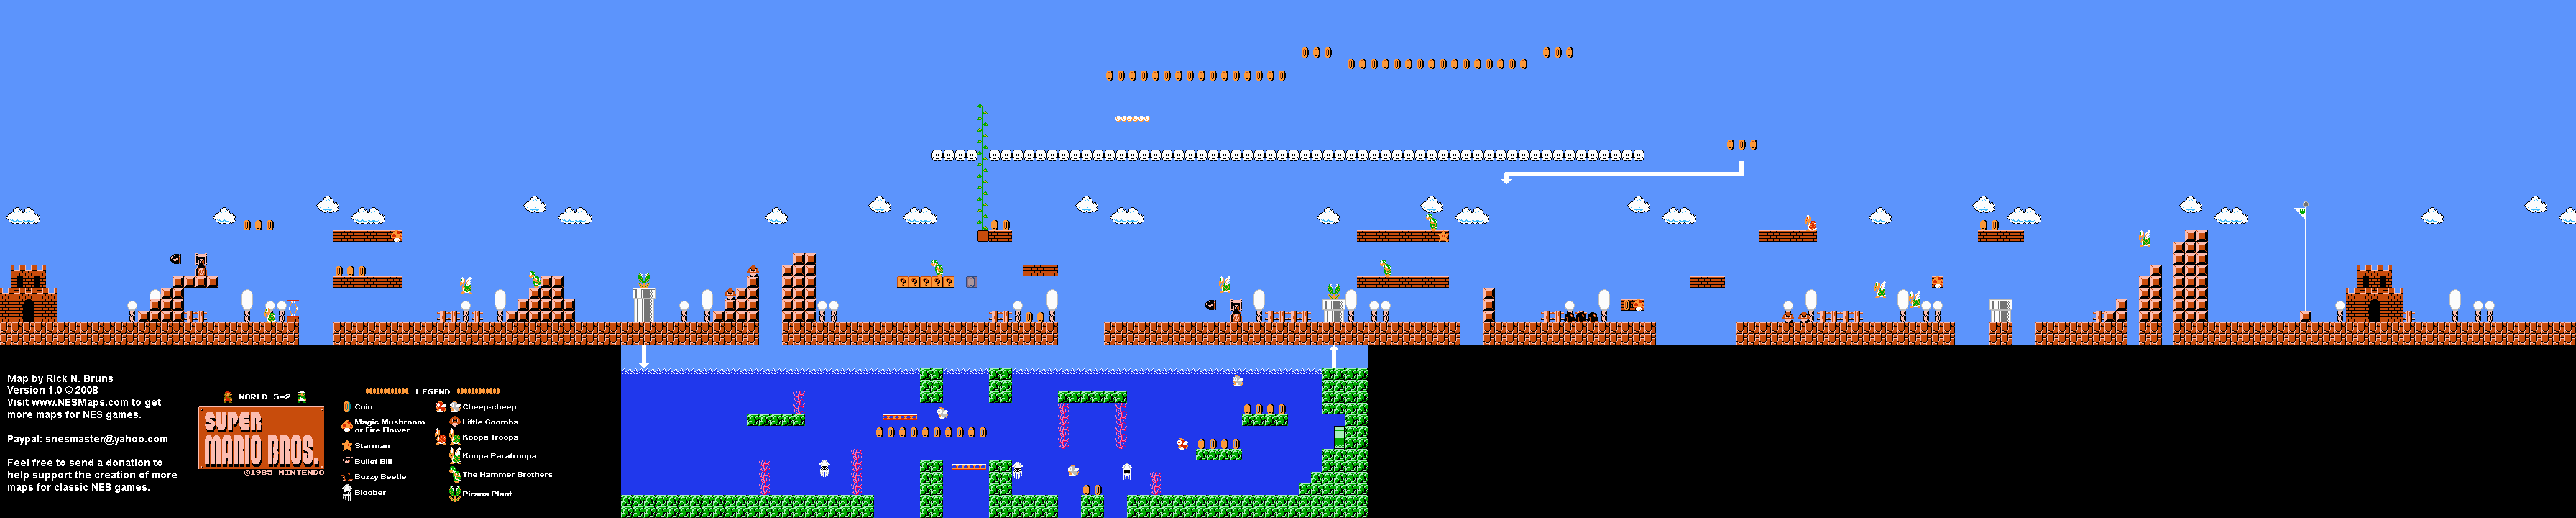 Super Mario Brothers - World 5-2 Nintendo NES Map